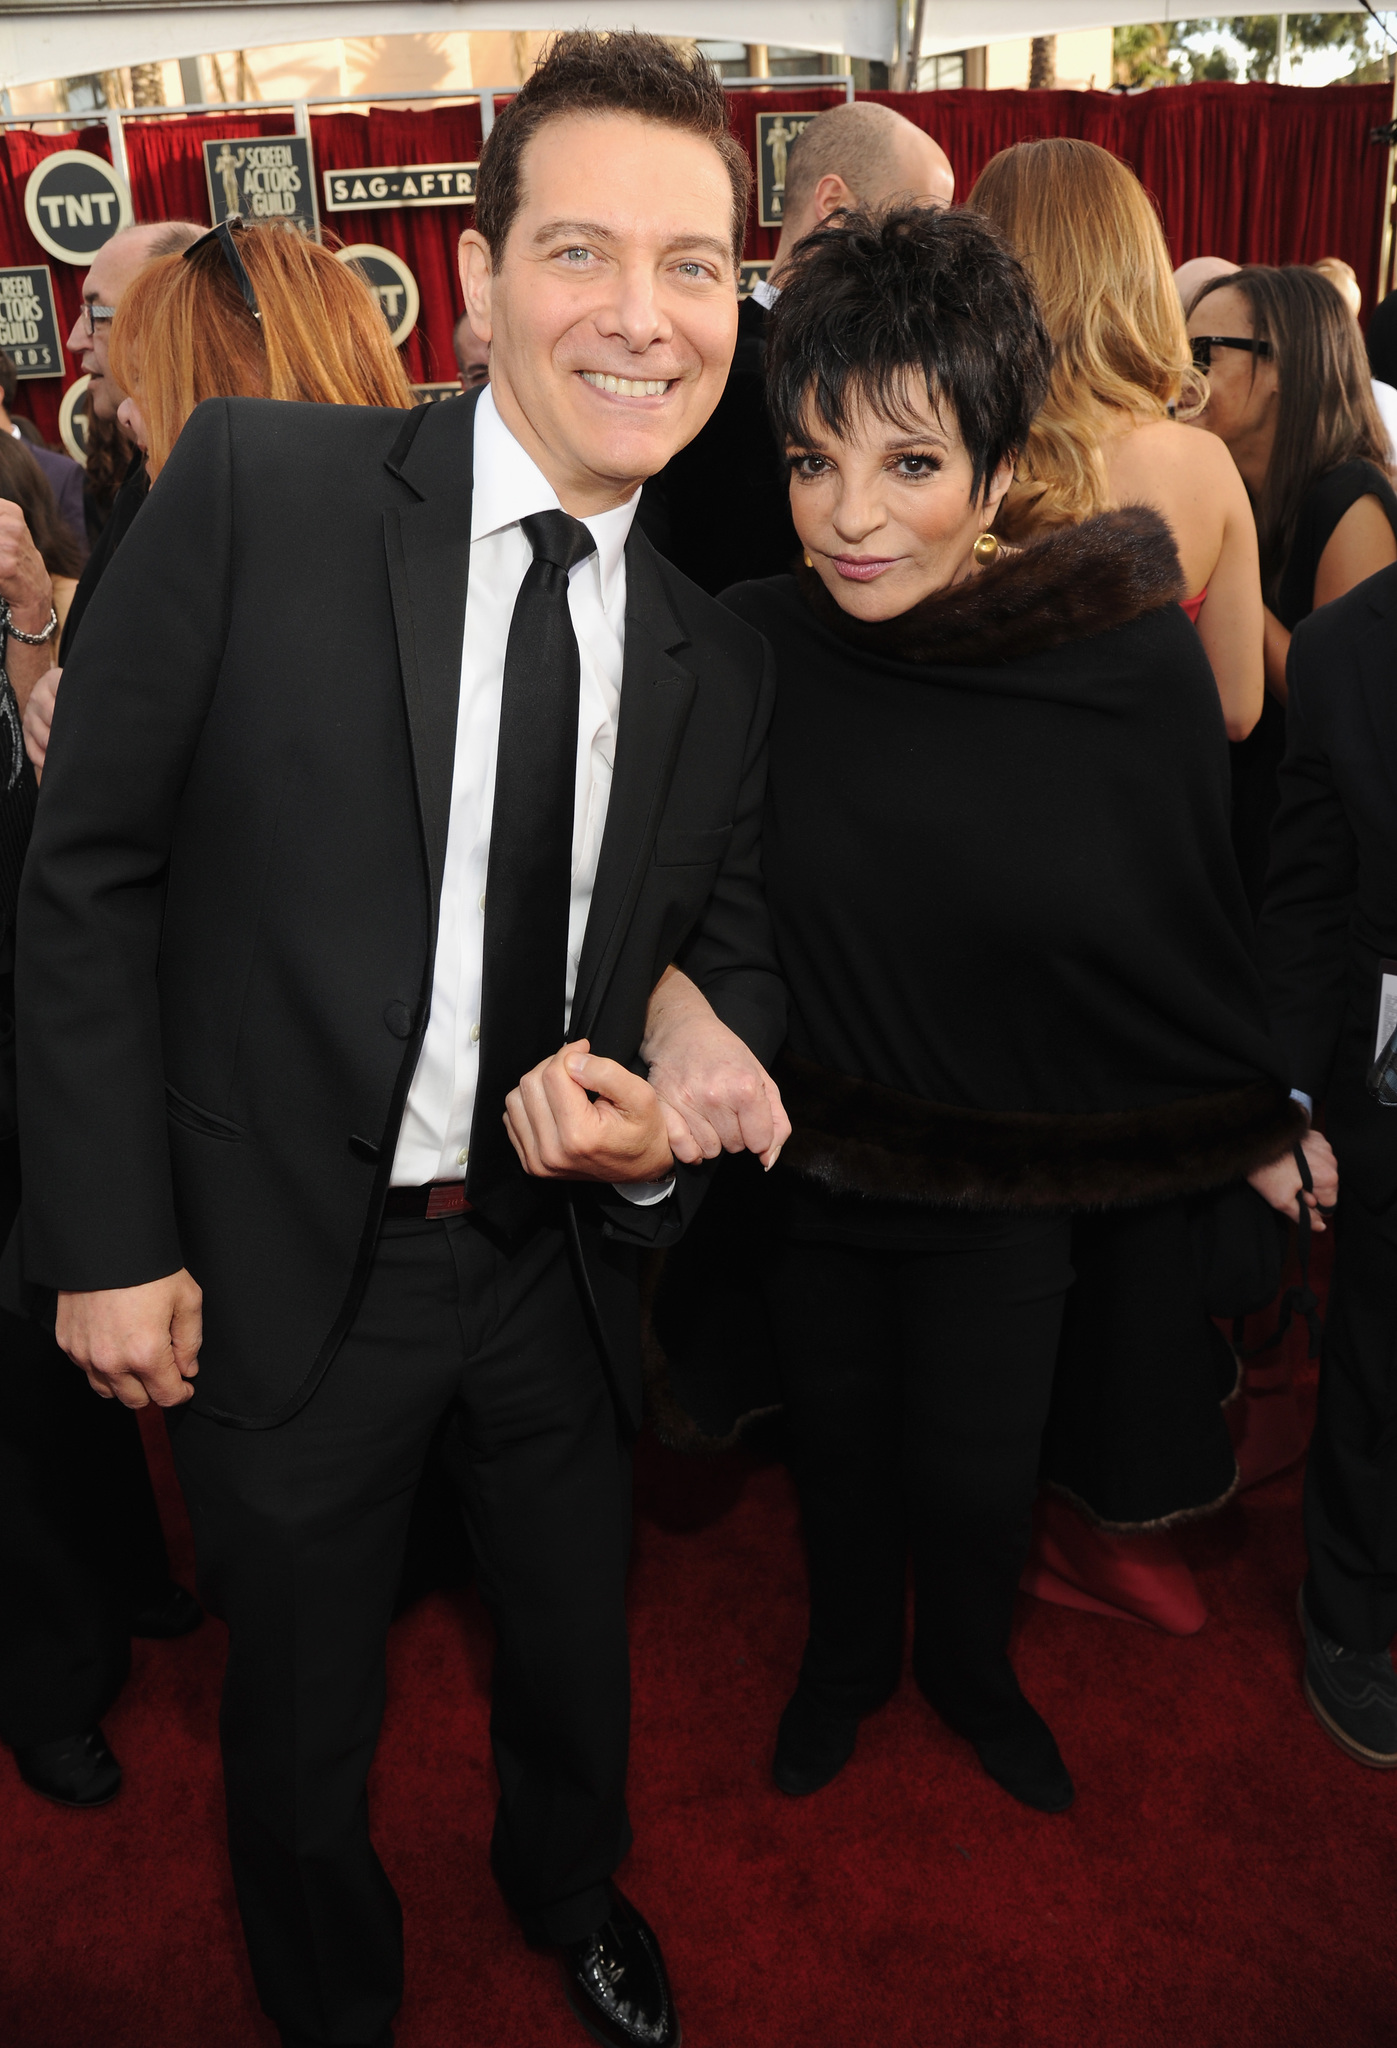 Michael Feinstein and Liza Minnelli